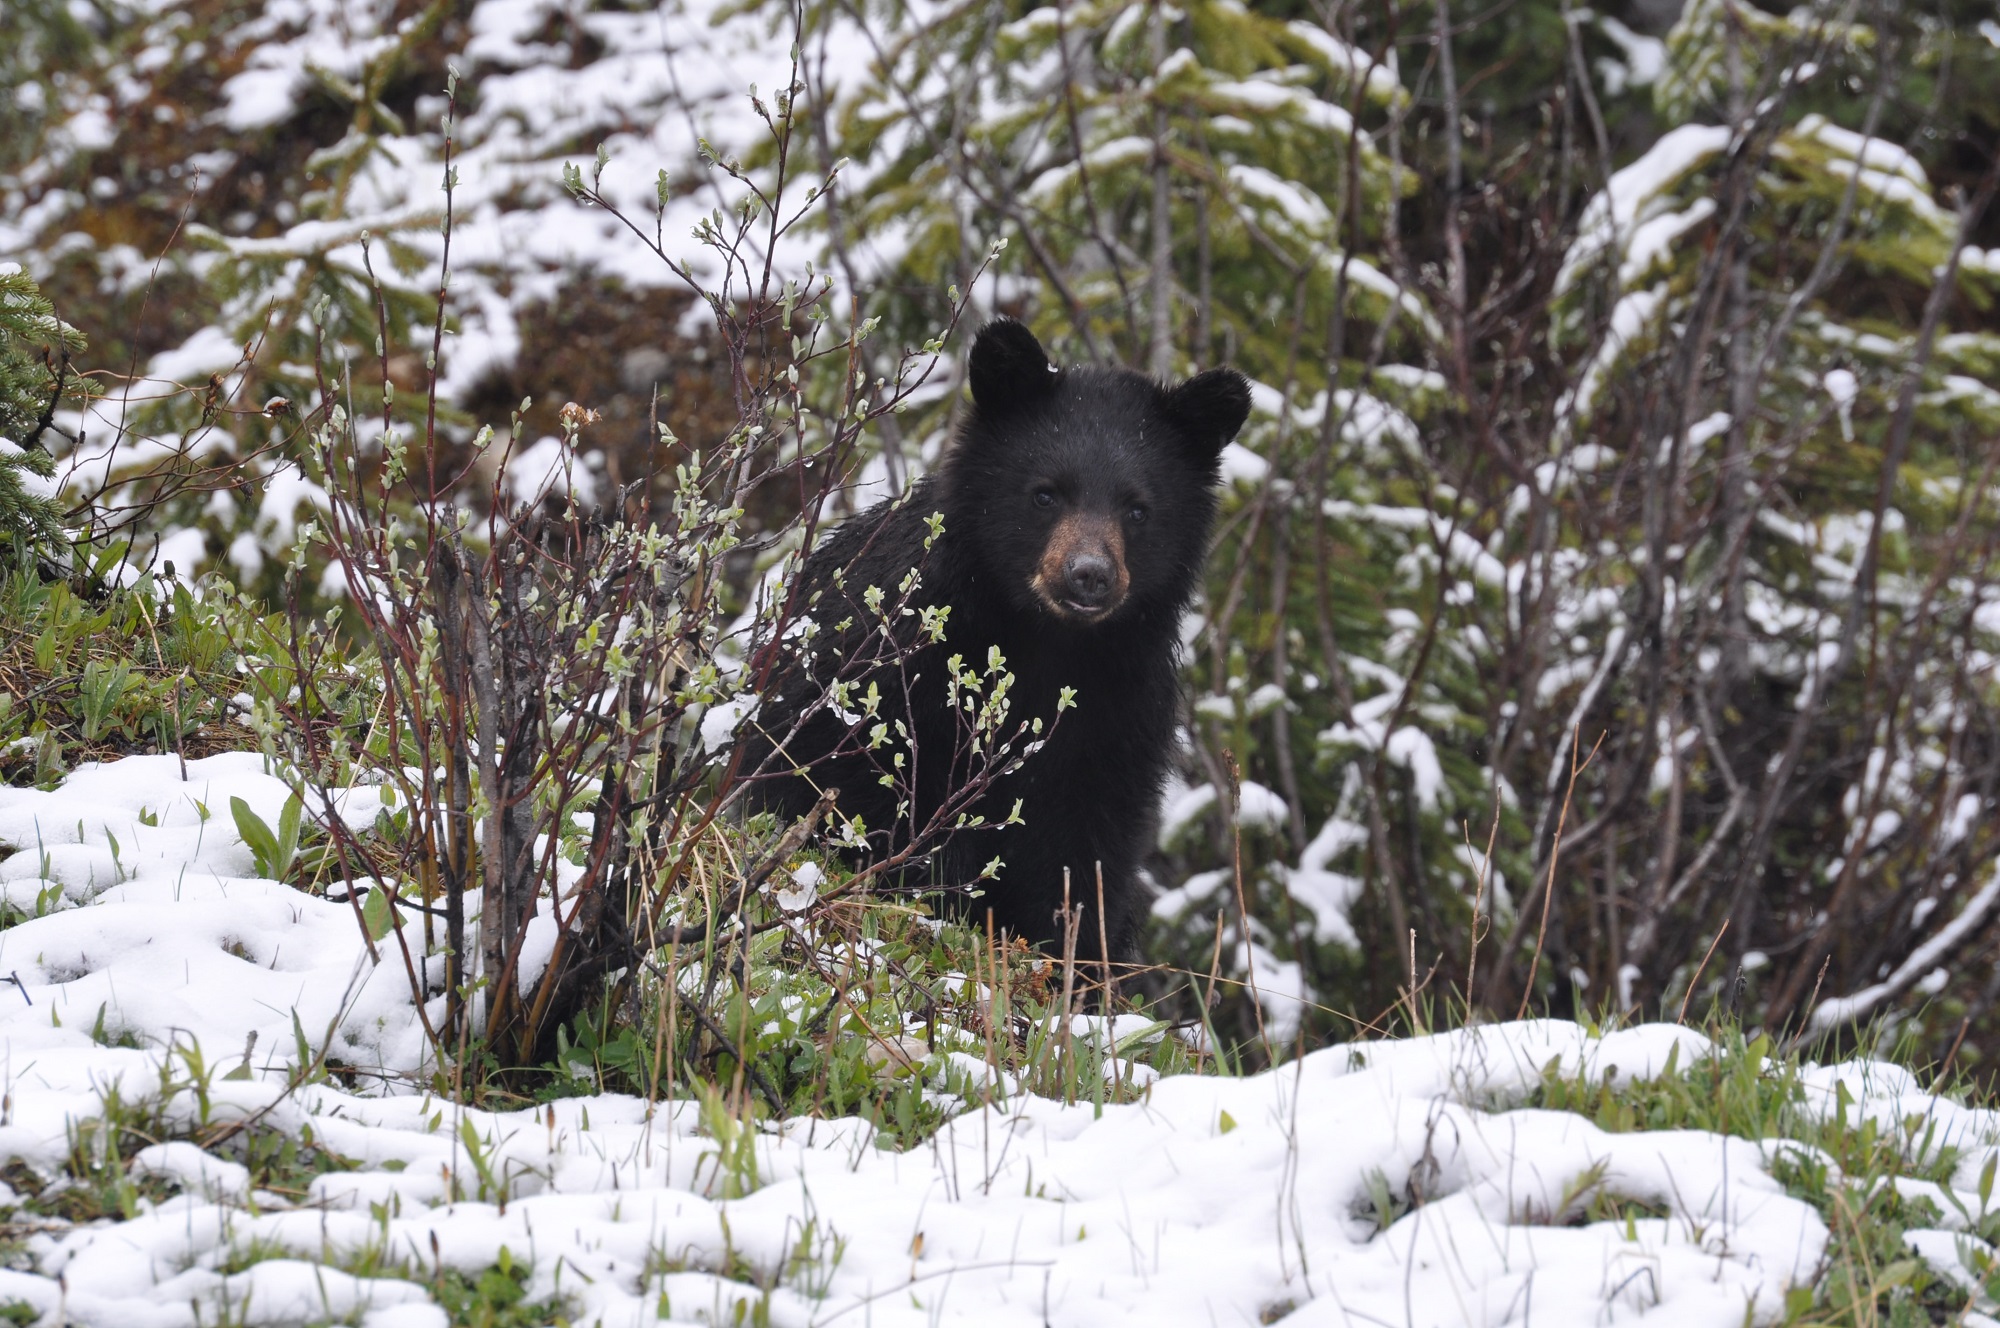 Image shows a black bear cub